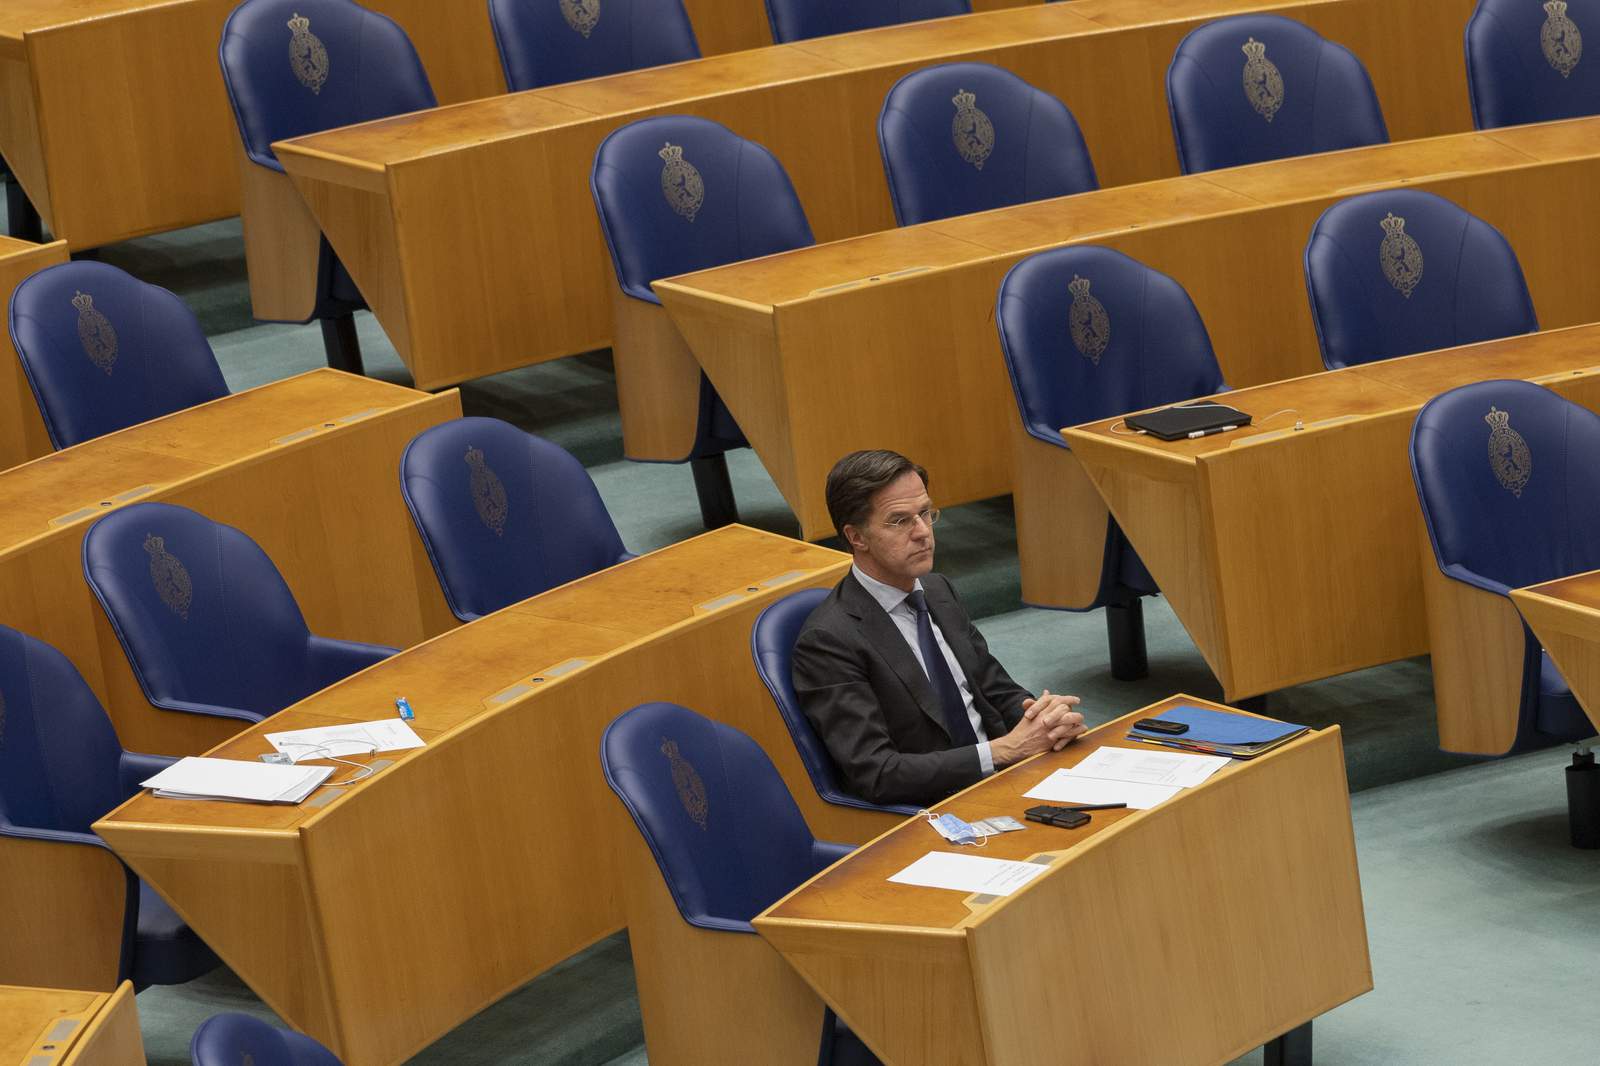 Dutch coalition building must reboot after Rutte rebuke